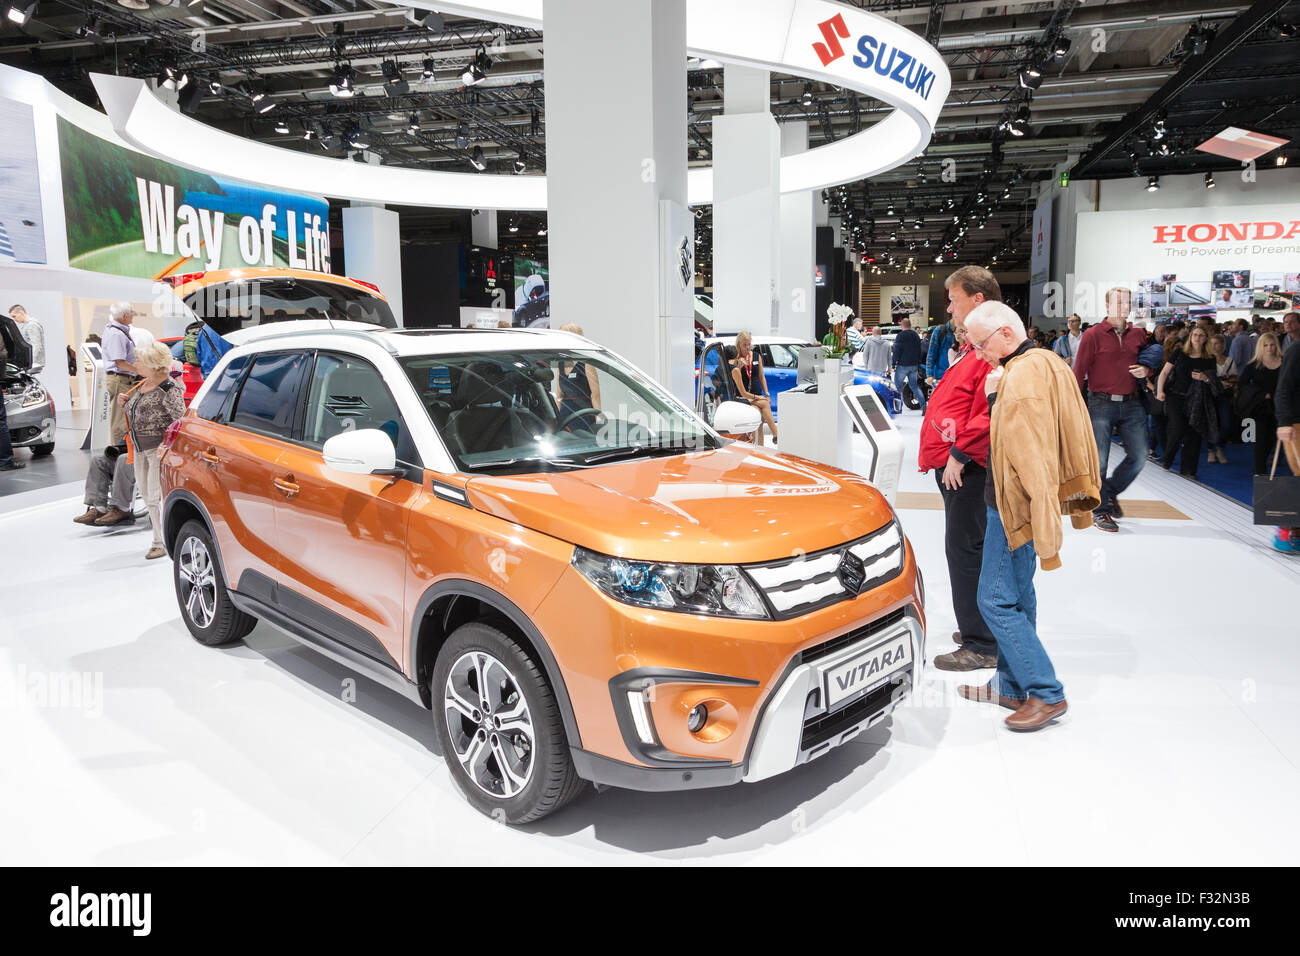 The new Suzuki Vitara at the IAA International Motor Show 2015 Stock Photo  - Alamy